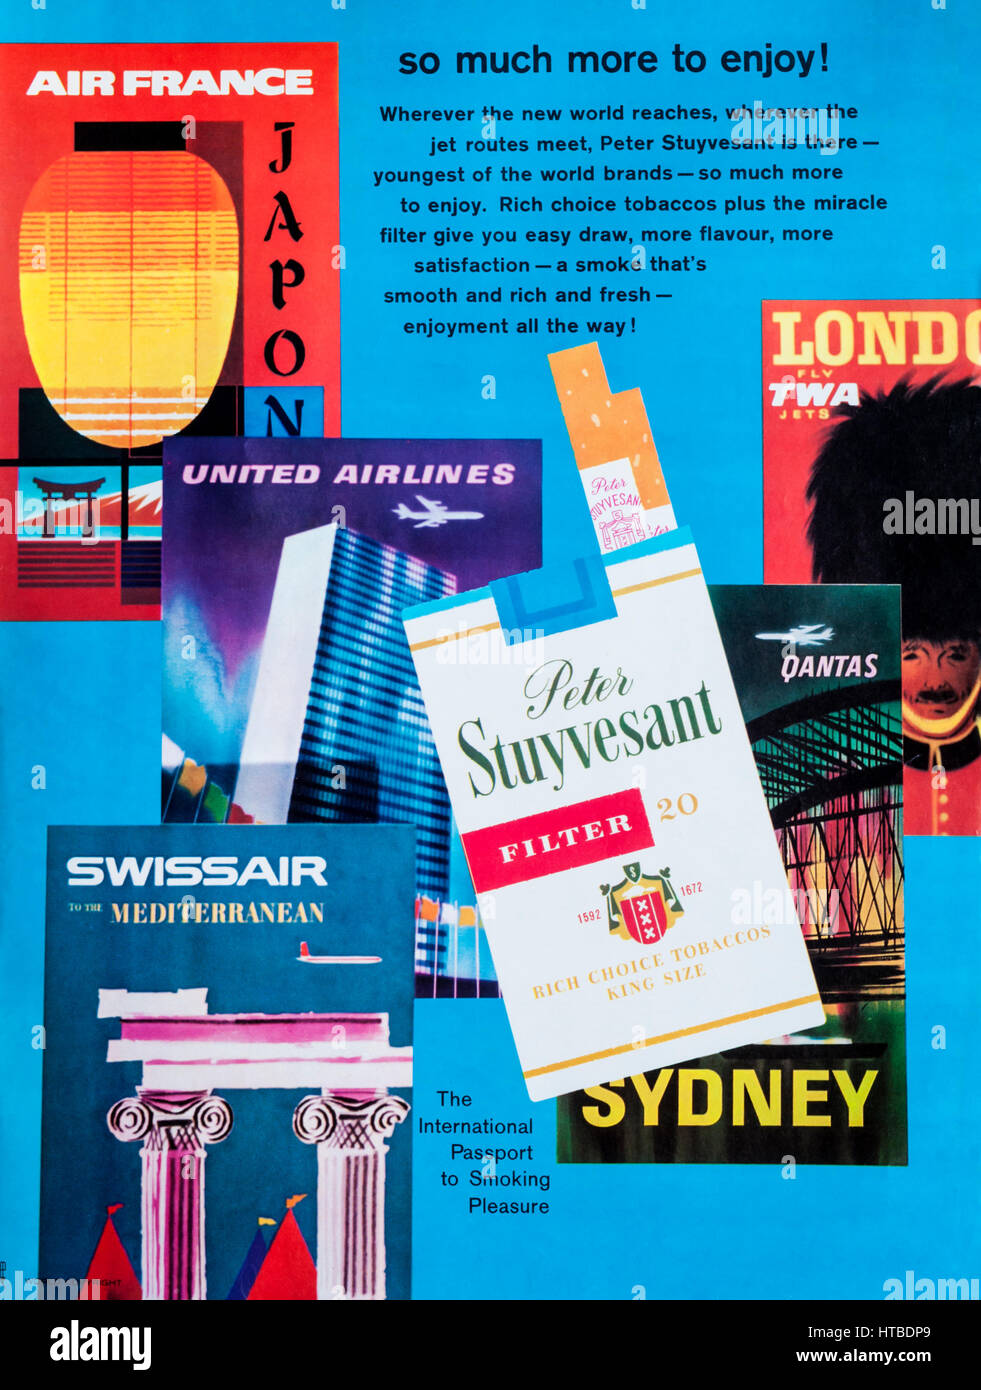 A 1960s magazine advertisement advertising Peter Stuyvesant cigarettes. Stock Photo